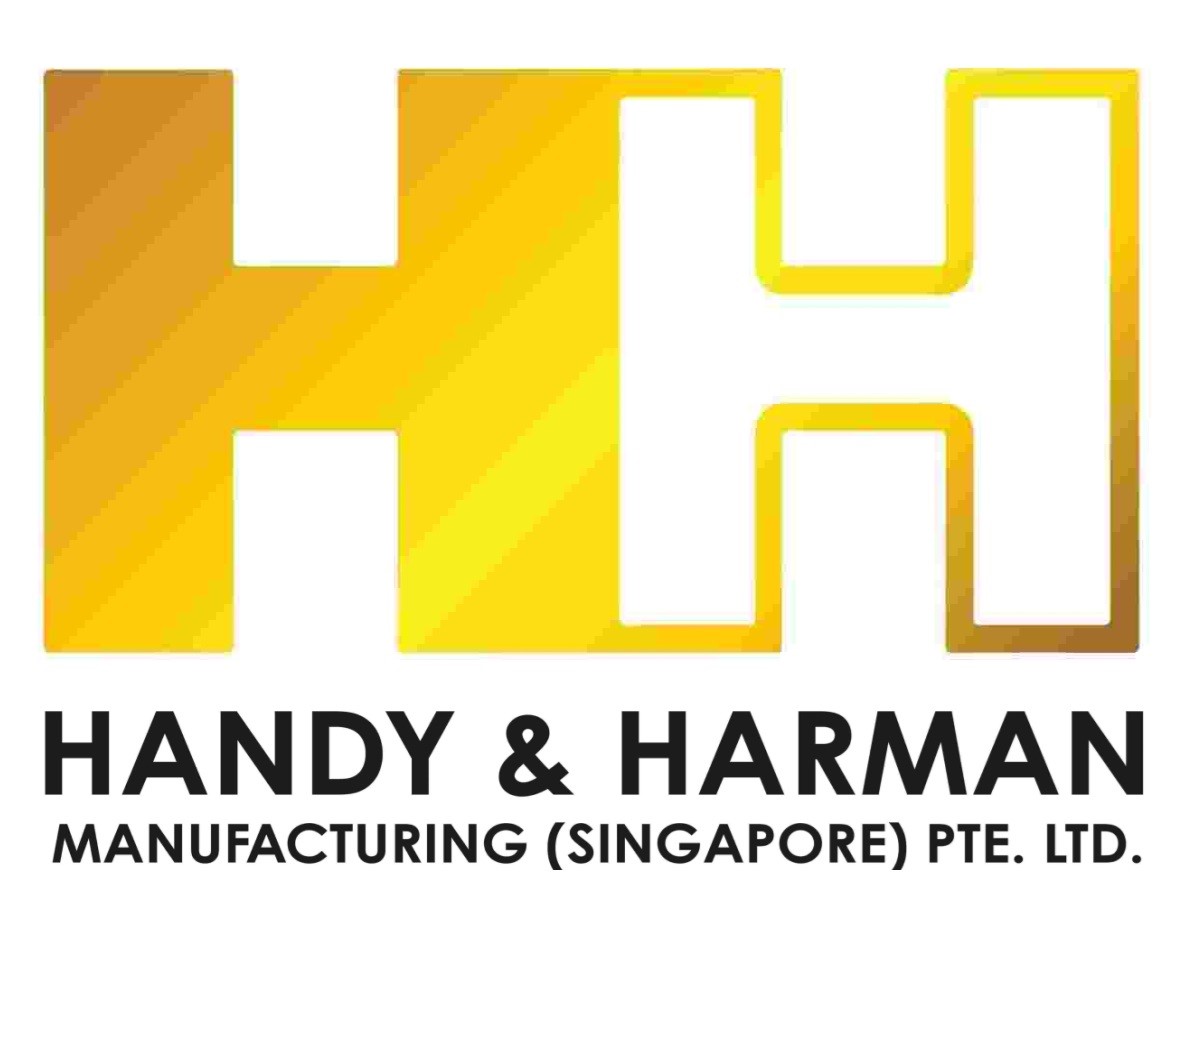 Handy & Harman Manufacturing (singapore) Pte. Ltd. logo